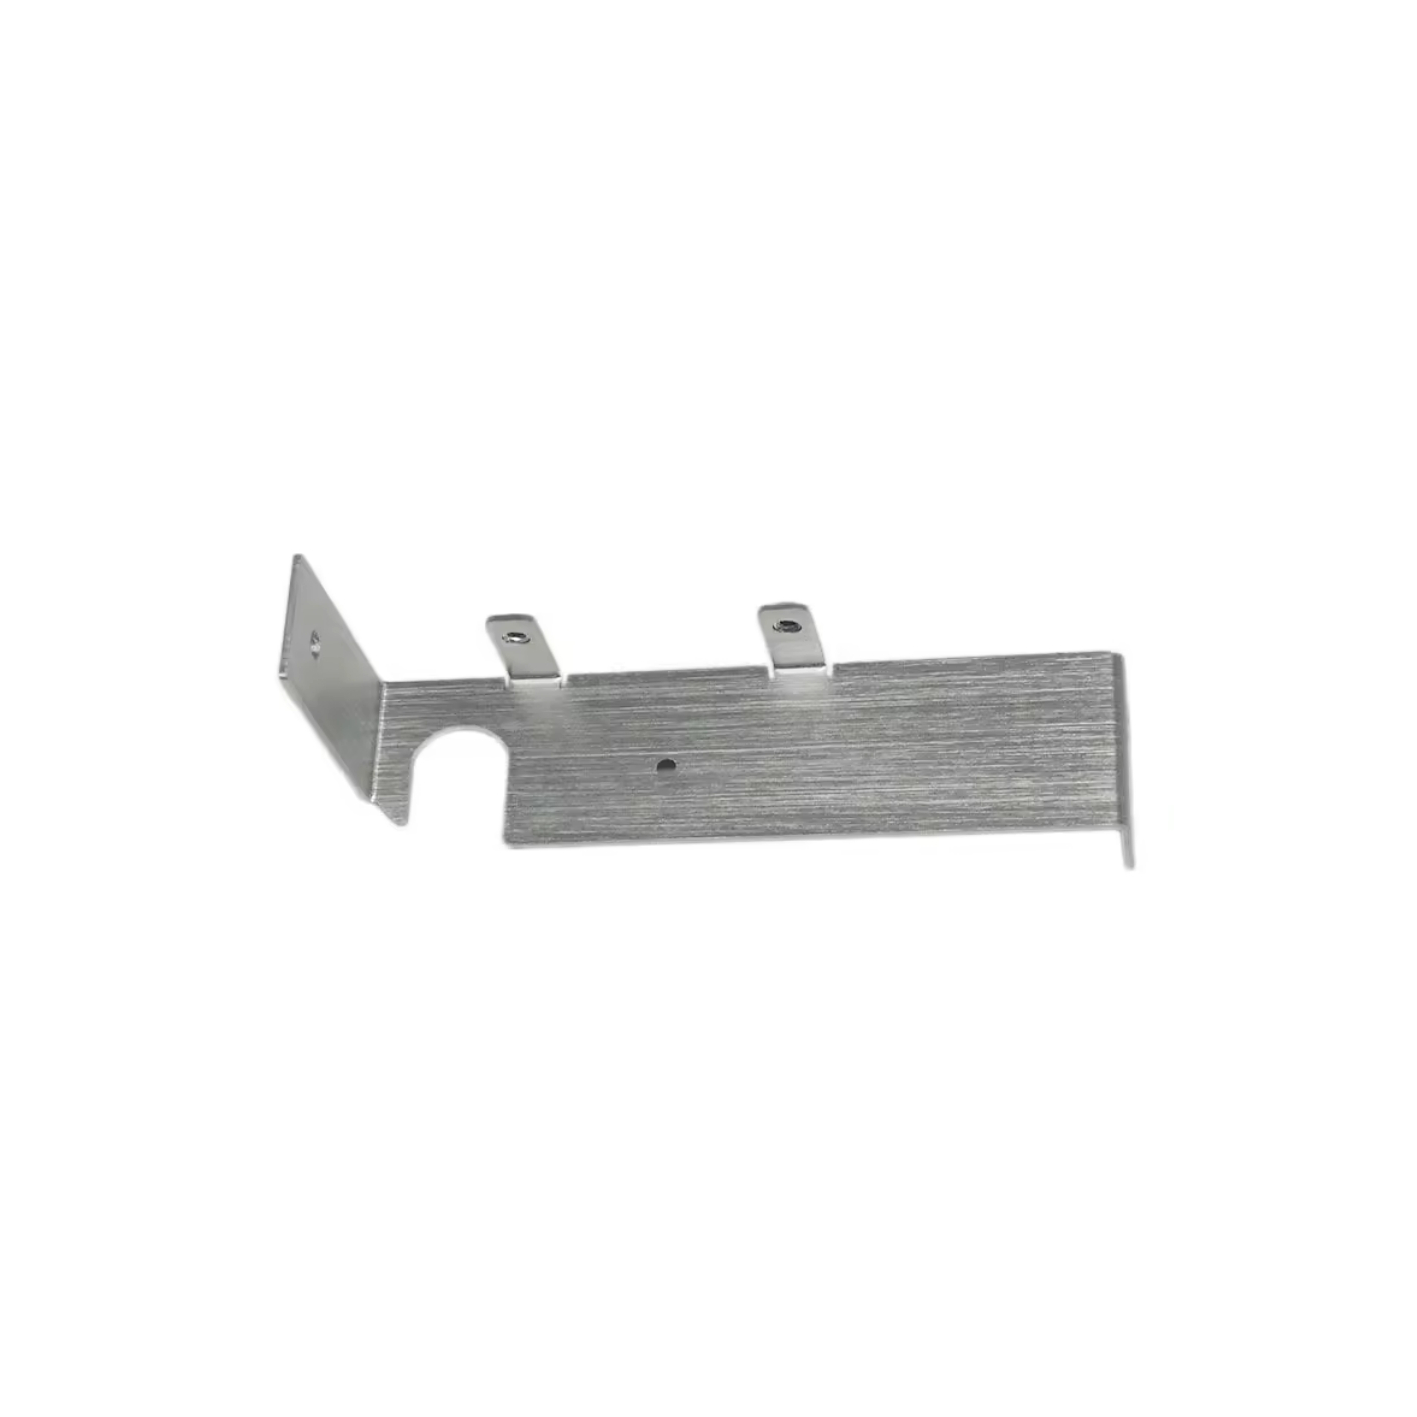 Customized sheet metal bending and stamping stainless steel bracket